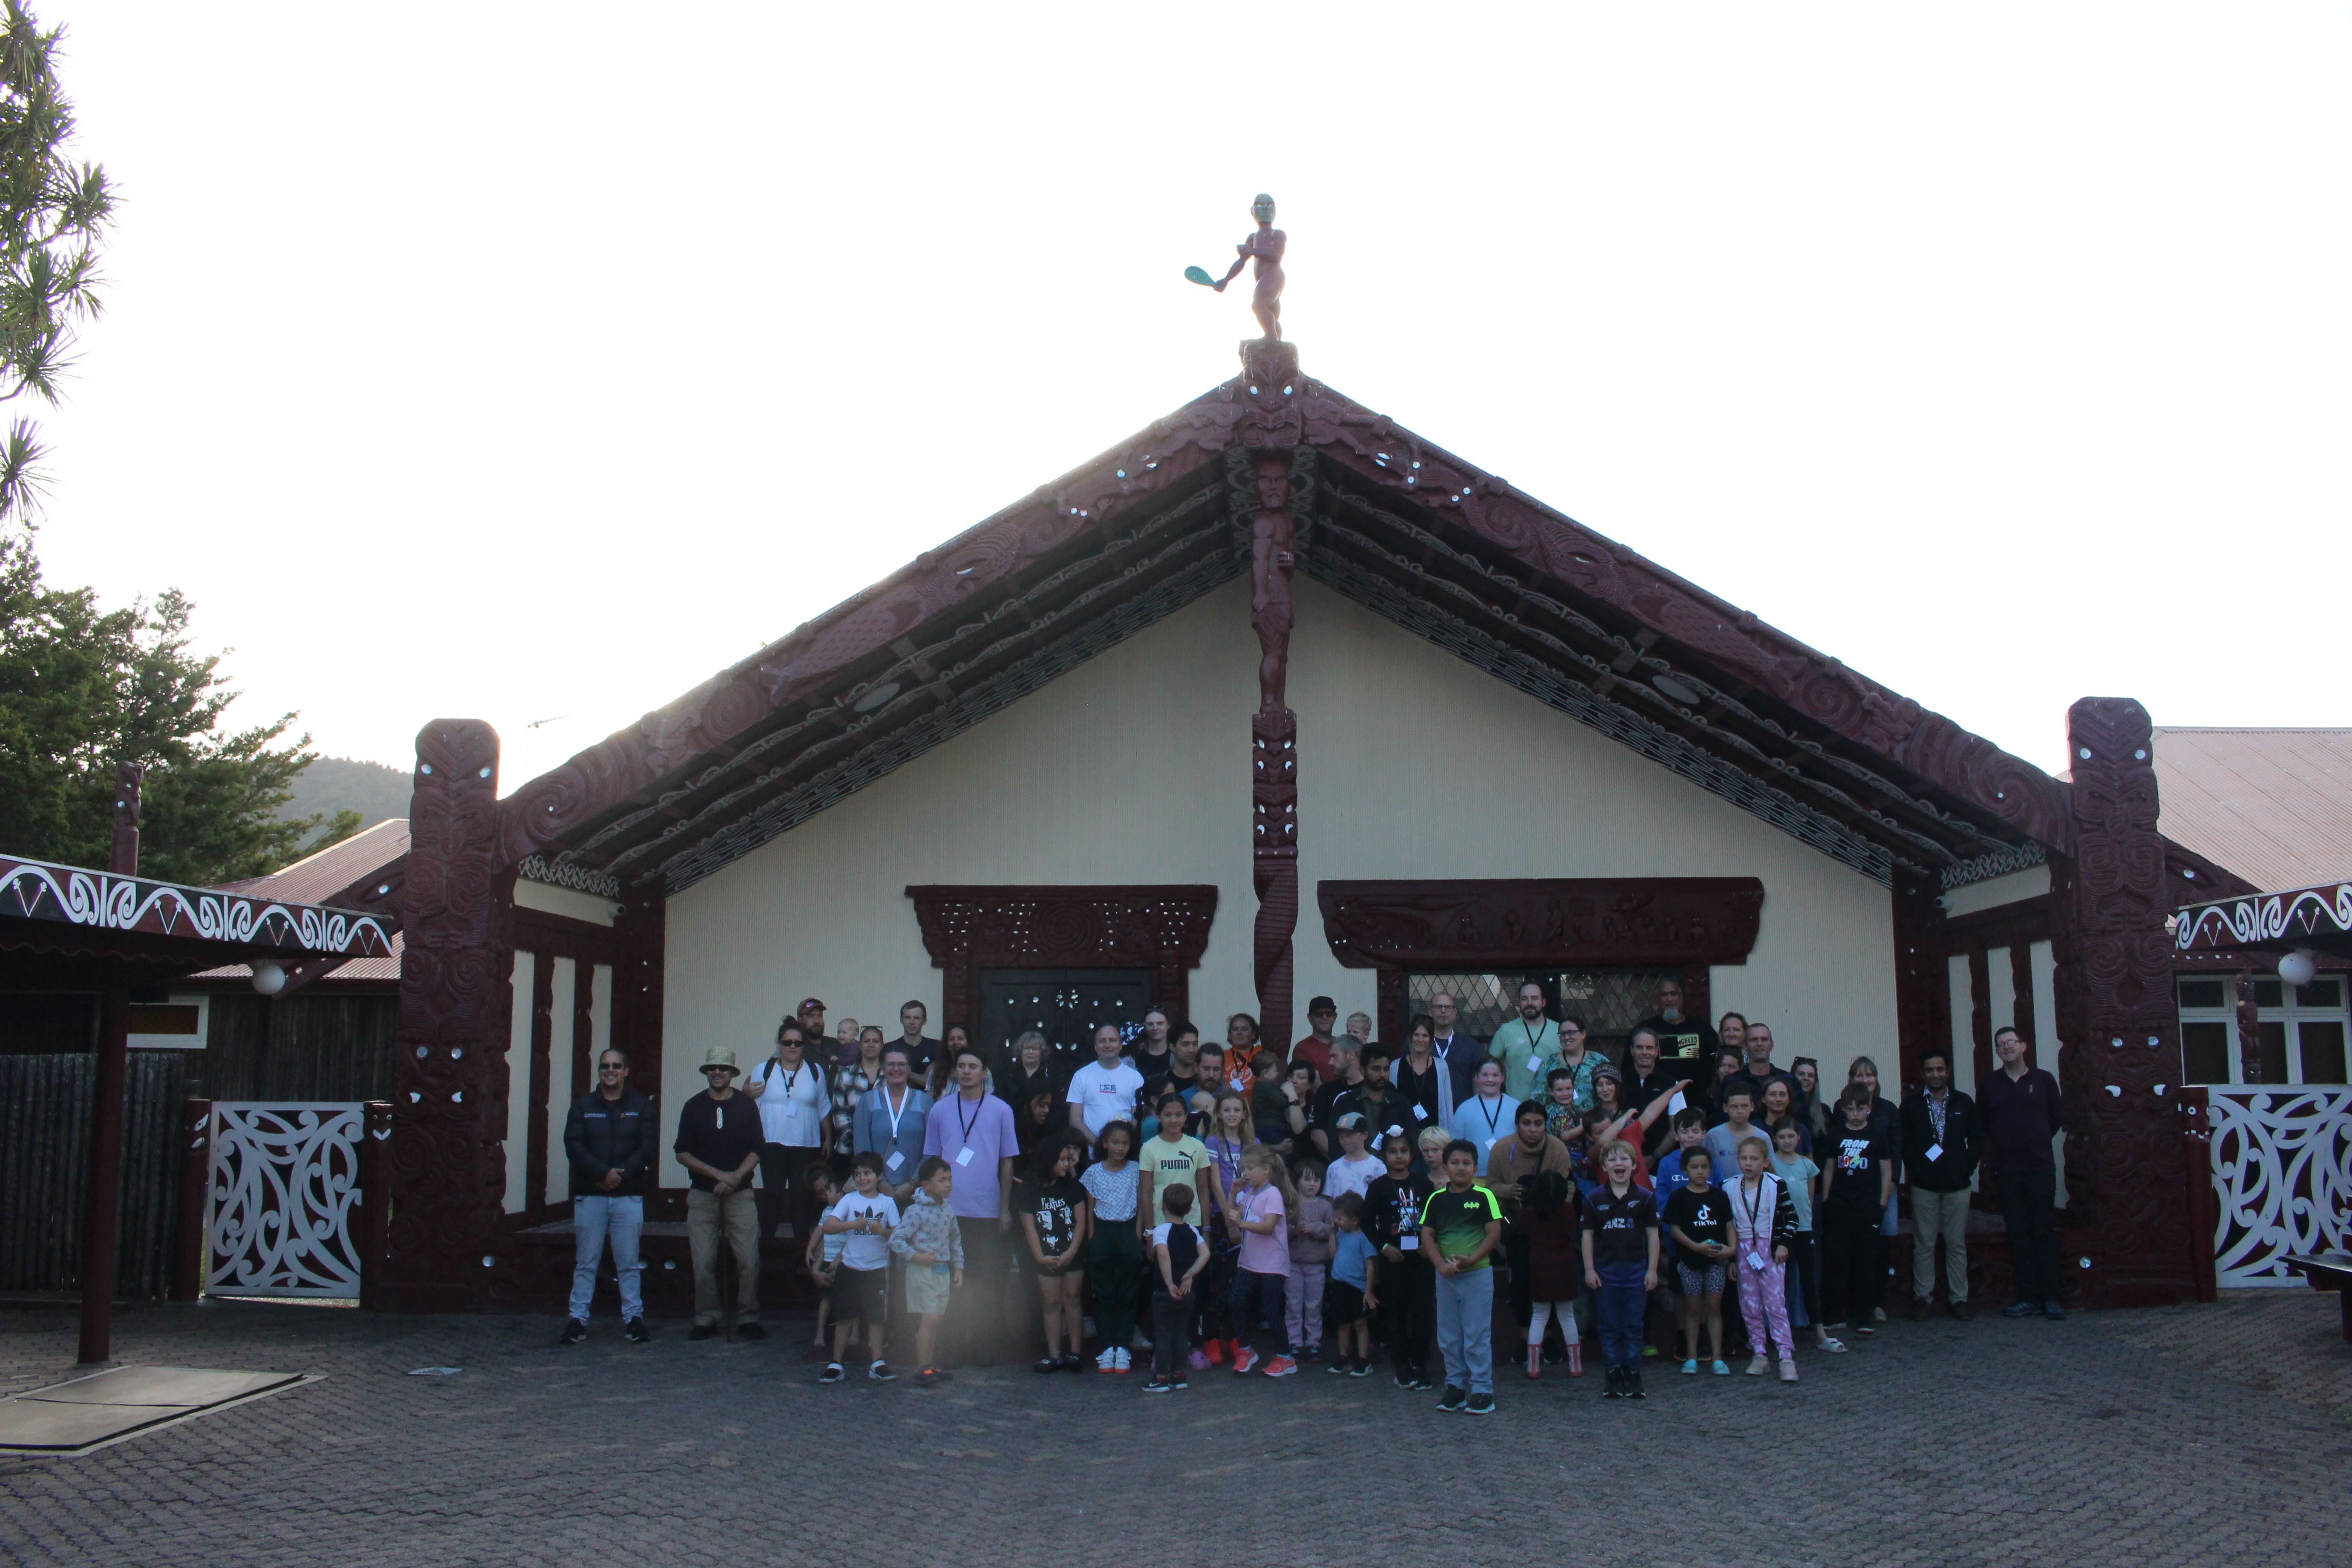 HFNZ members were welcomed onto Tūrangawaewae marae